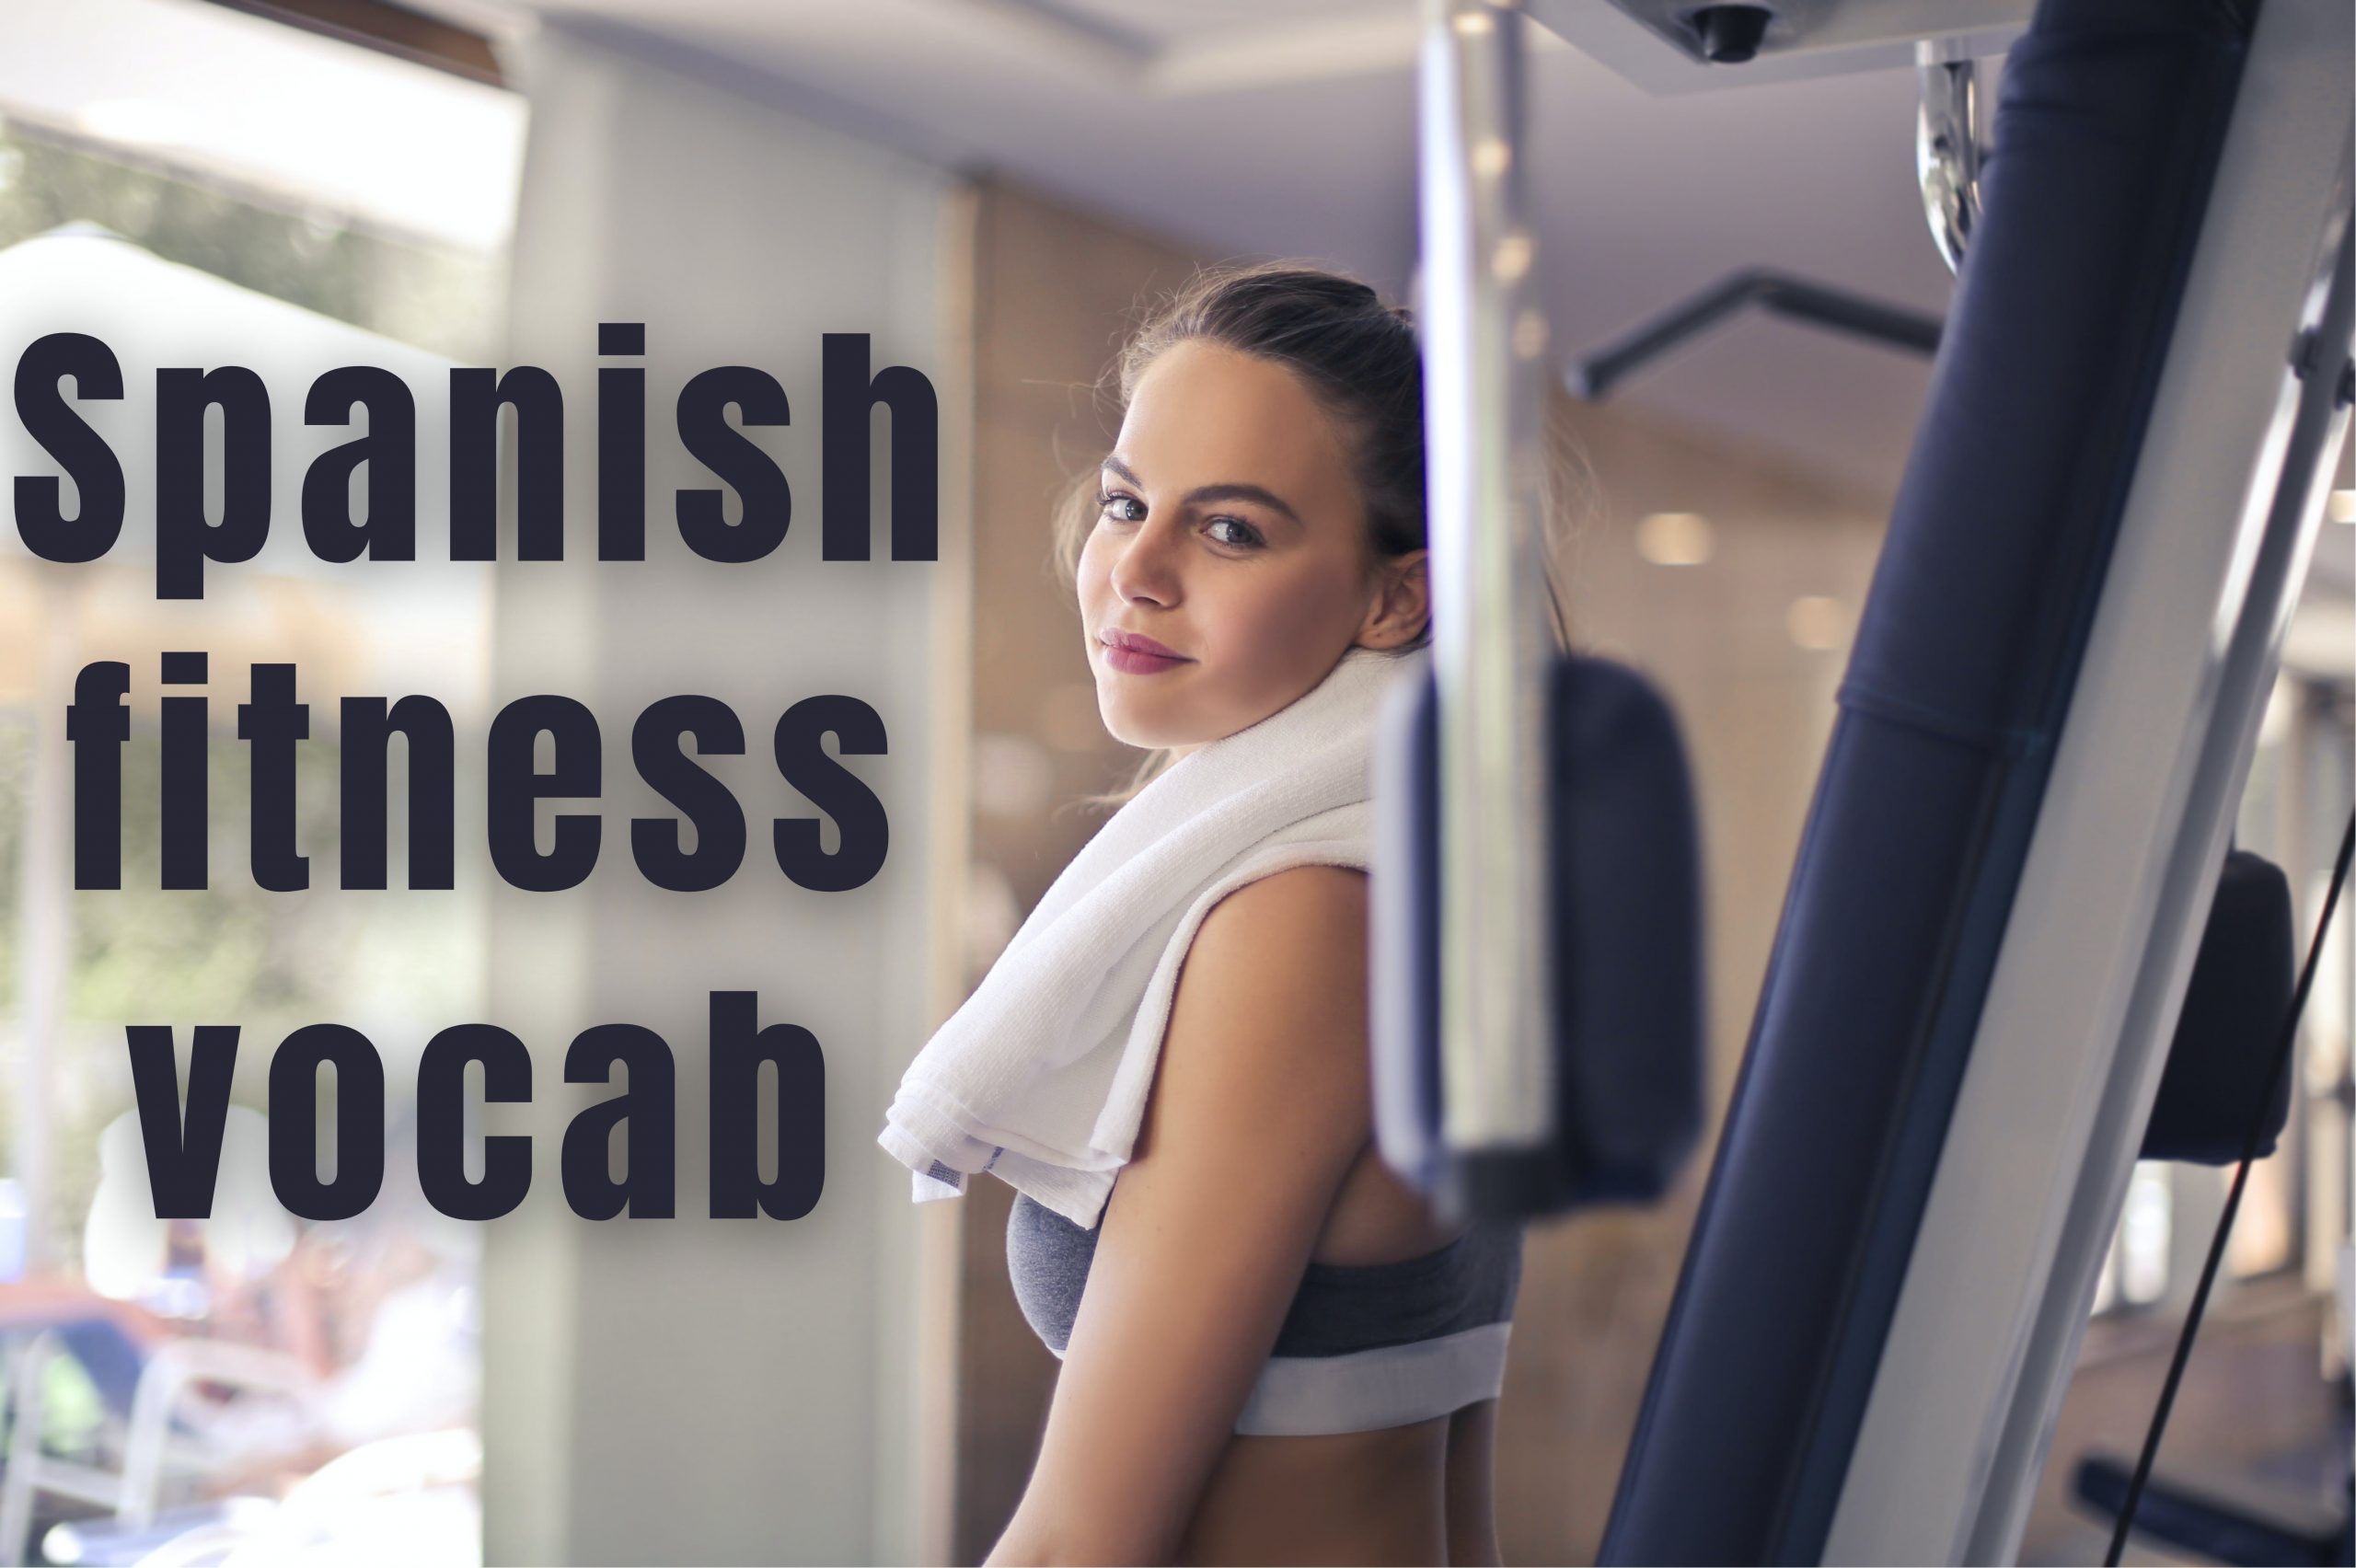 Weight Training Spanish Exercise Fitness